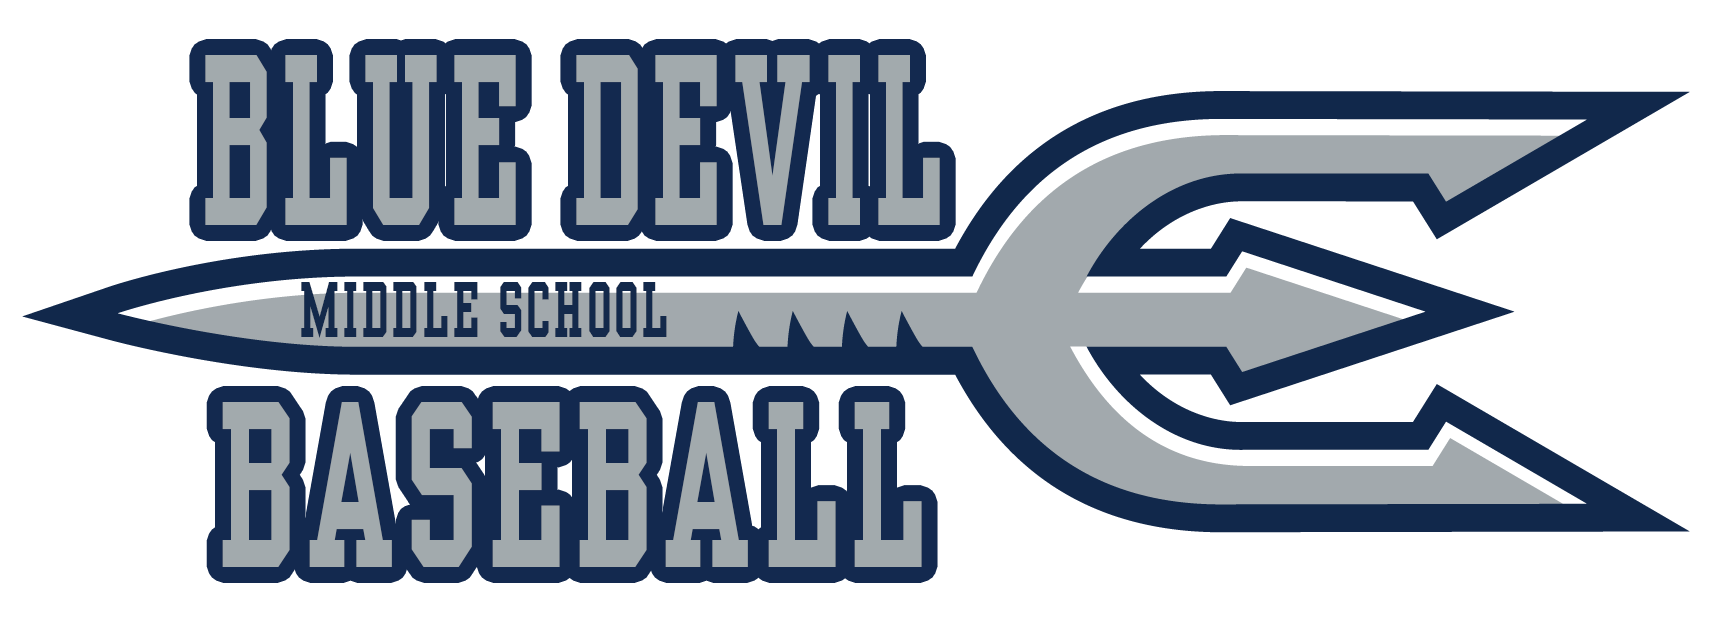 Blue Devil Middle School Baseball